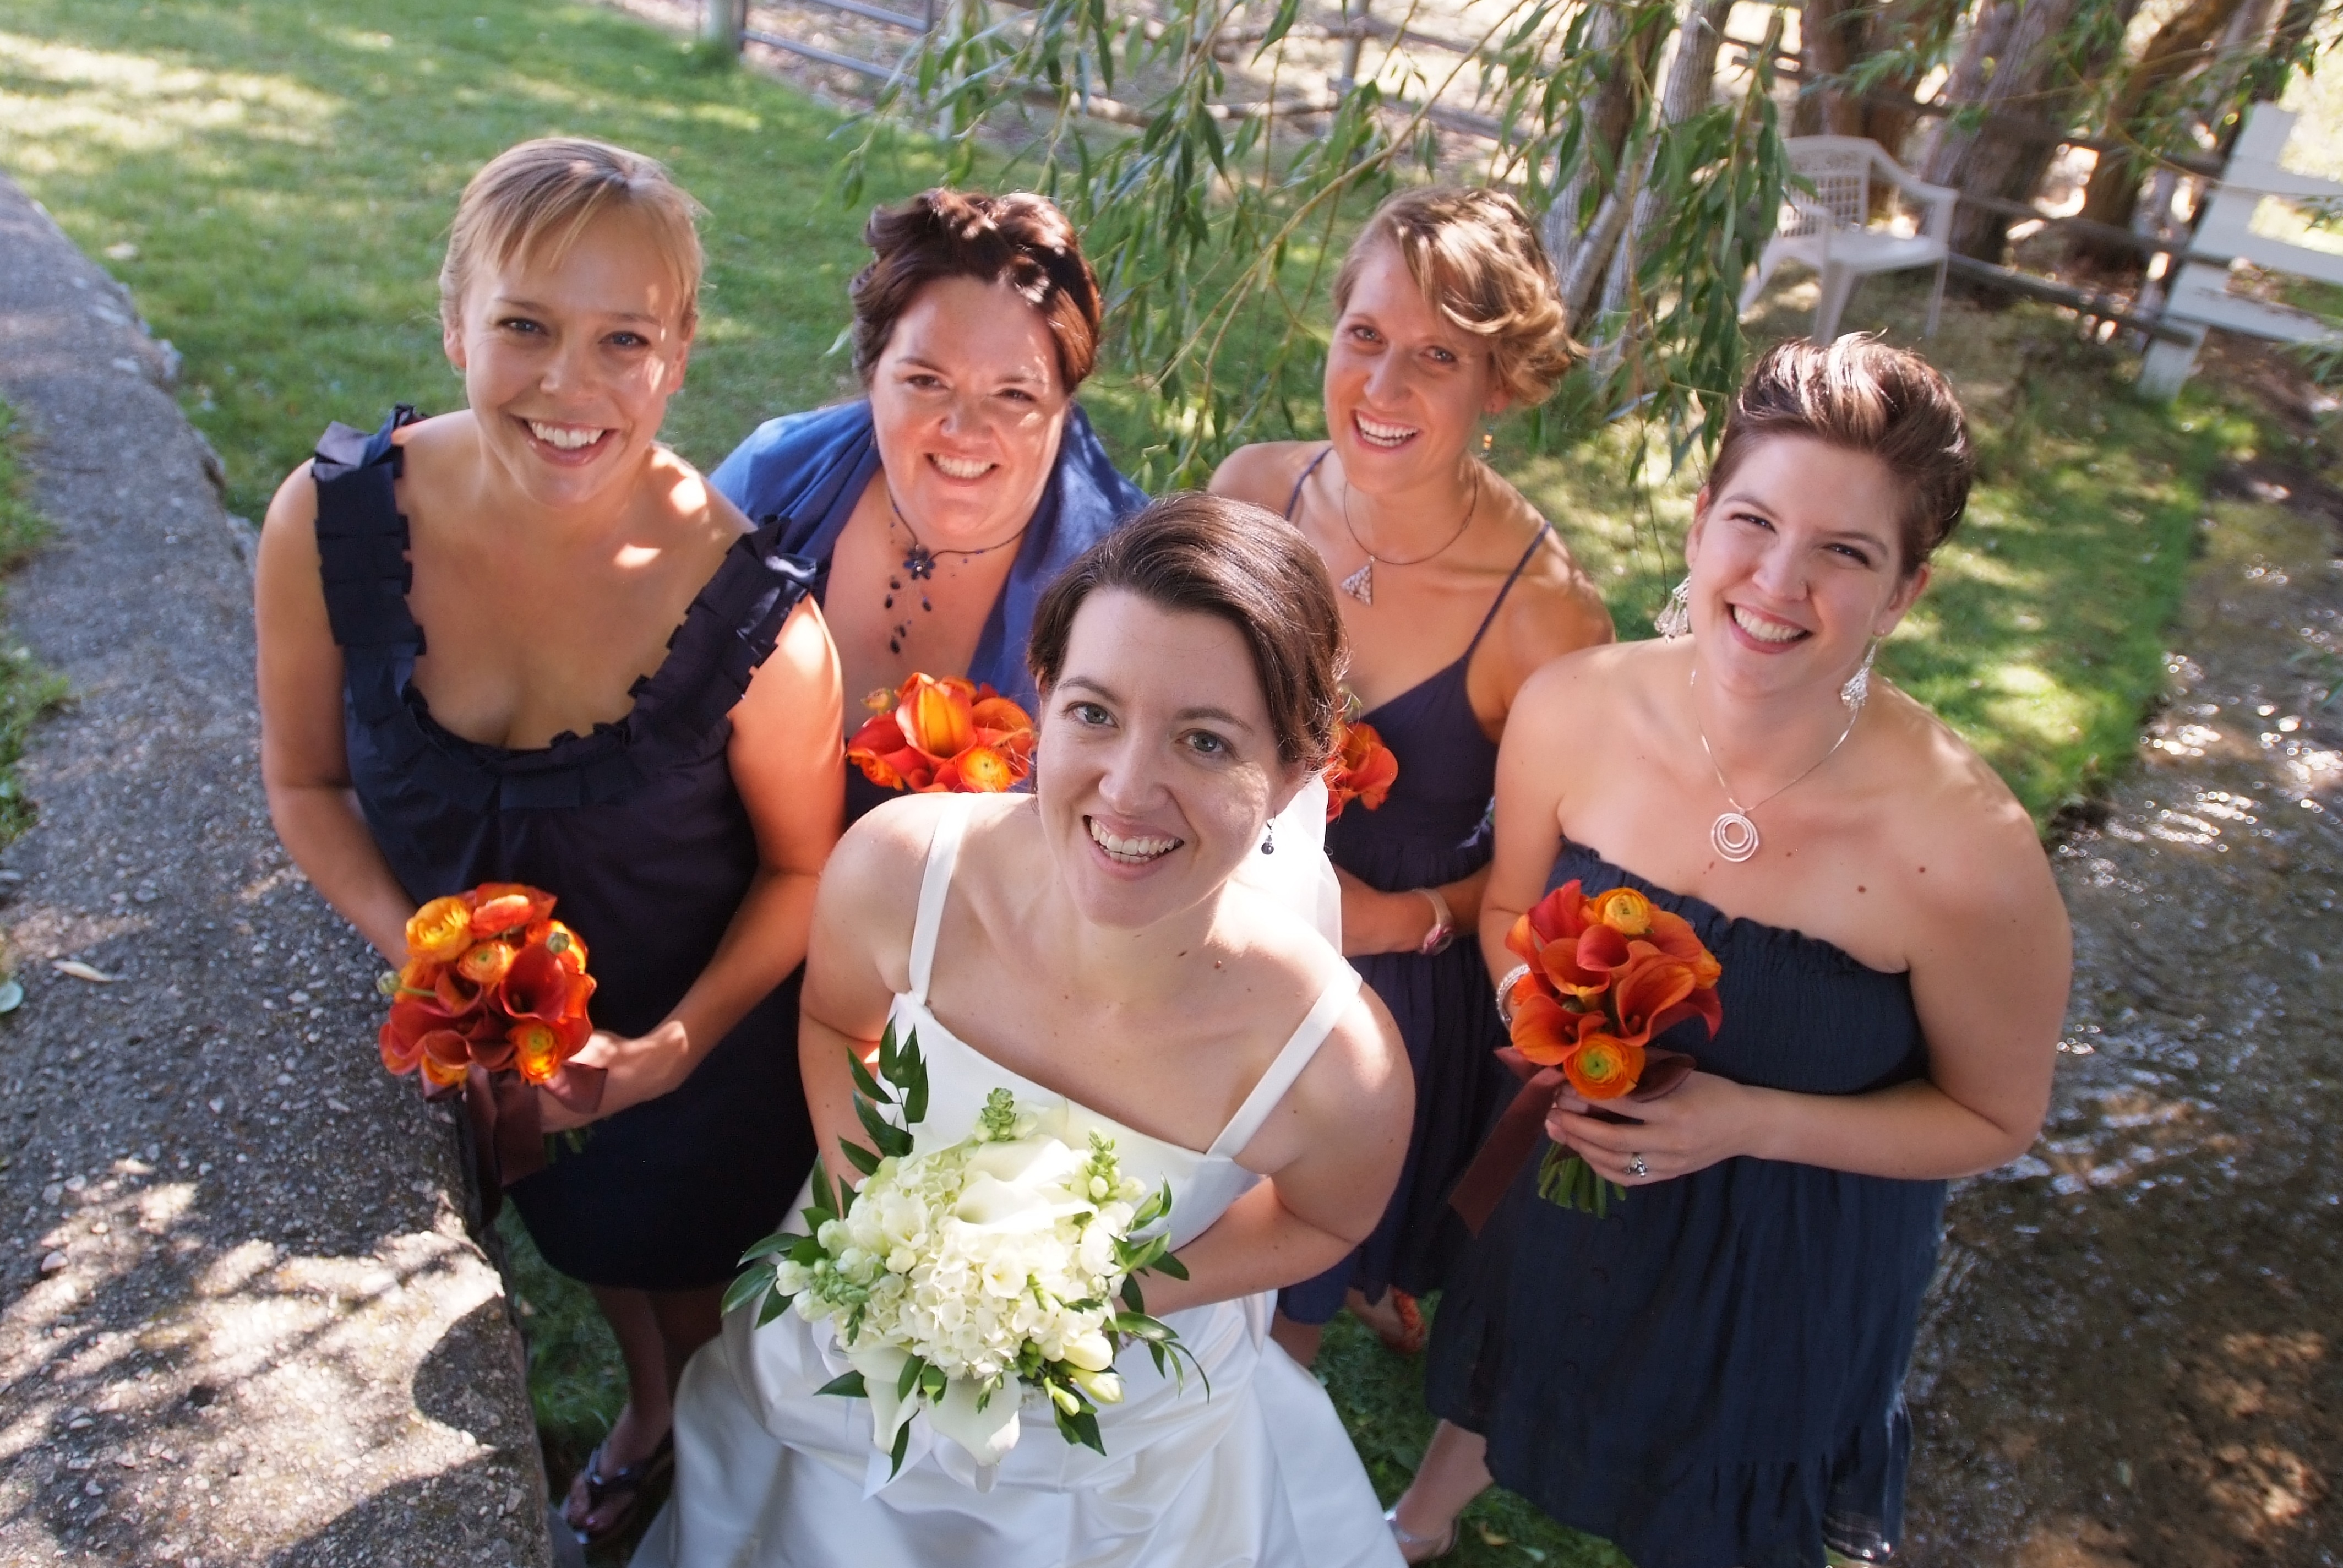 Navy blue bridesmaid dresses with orange flowers